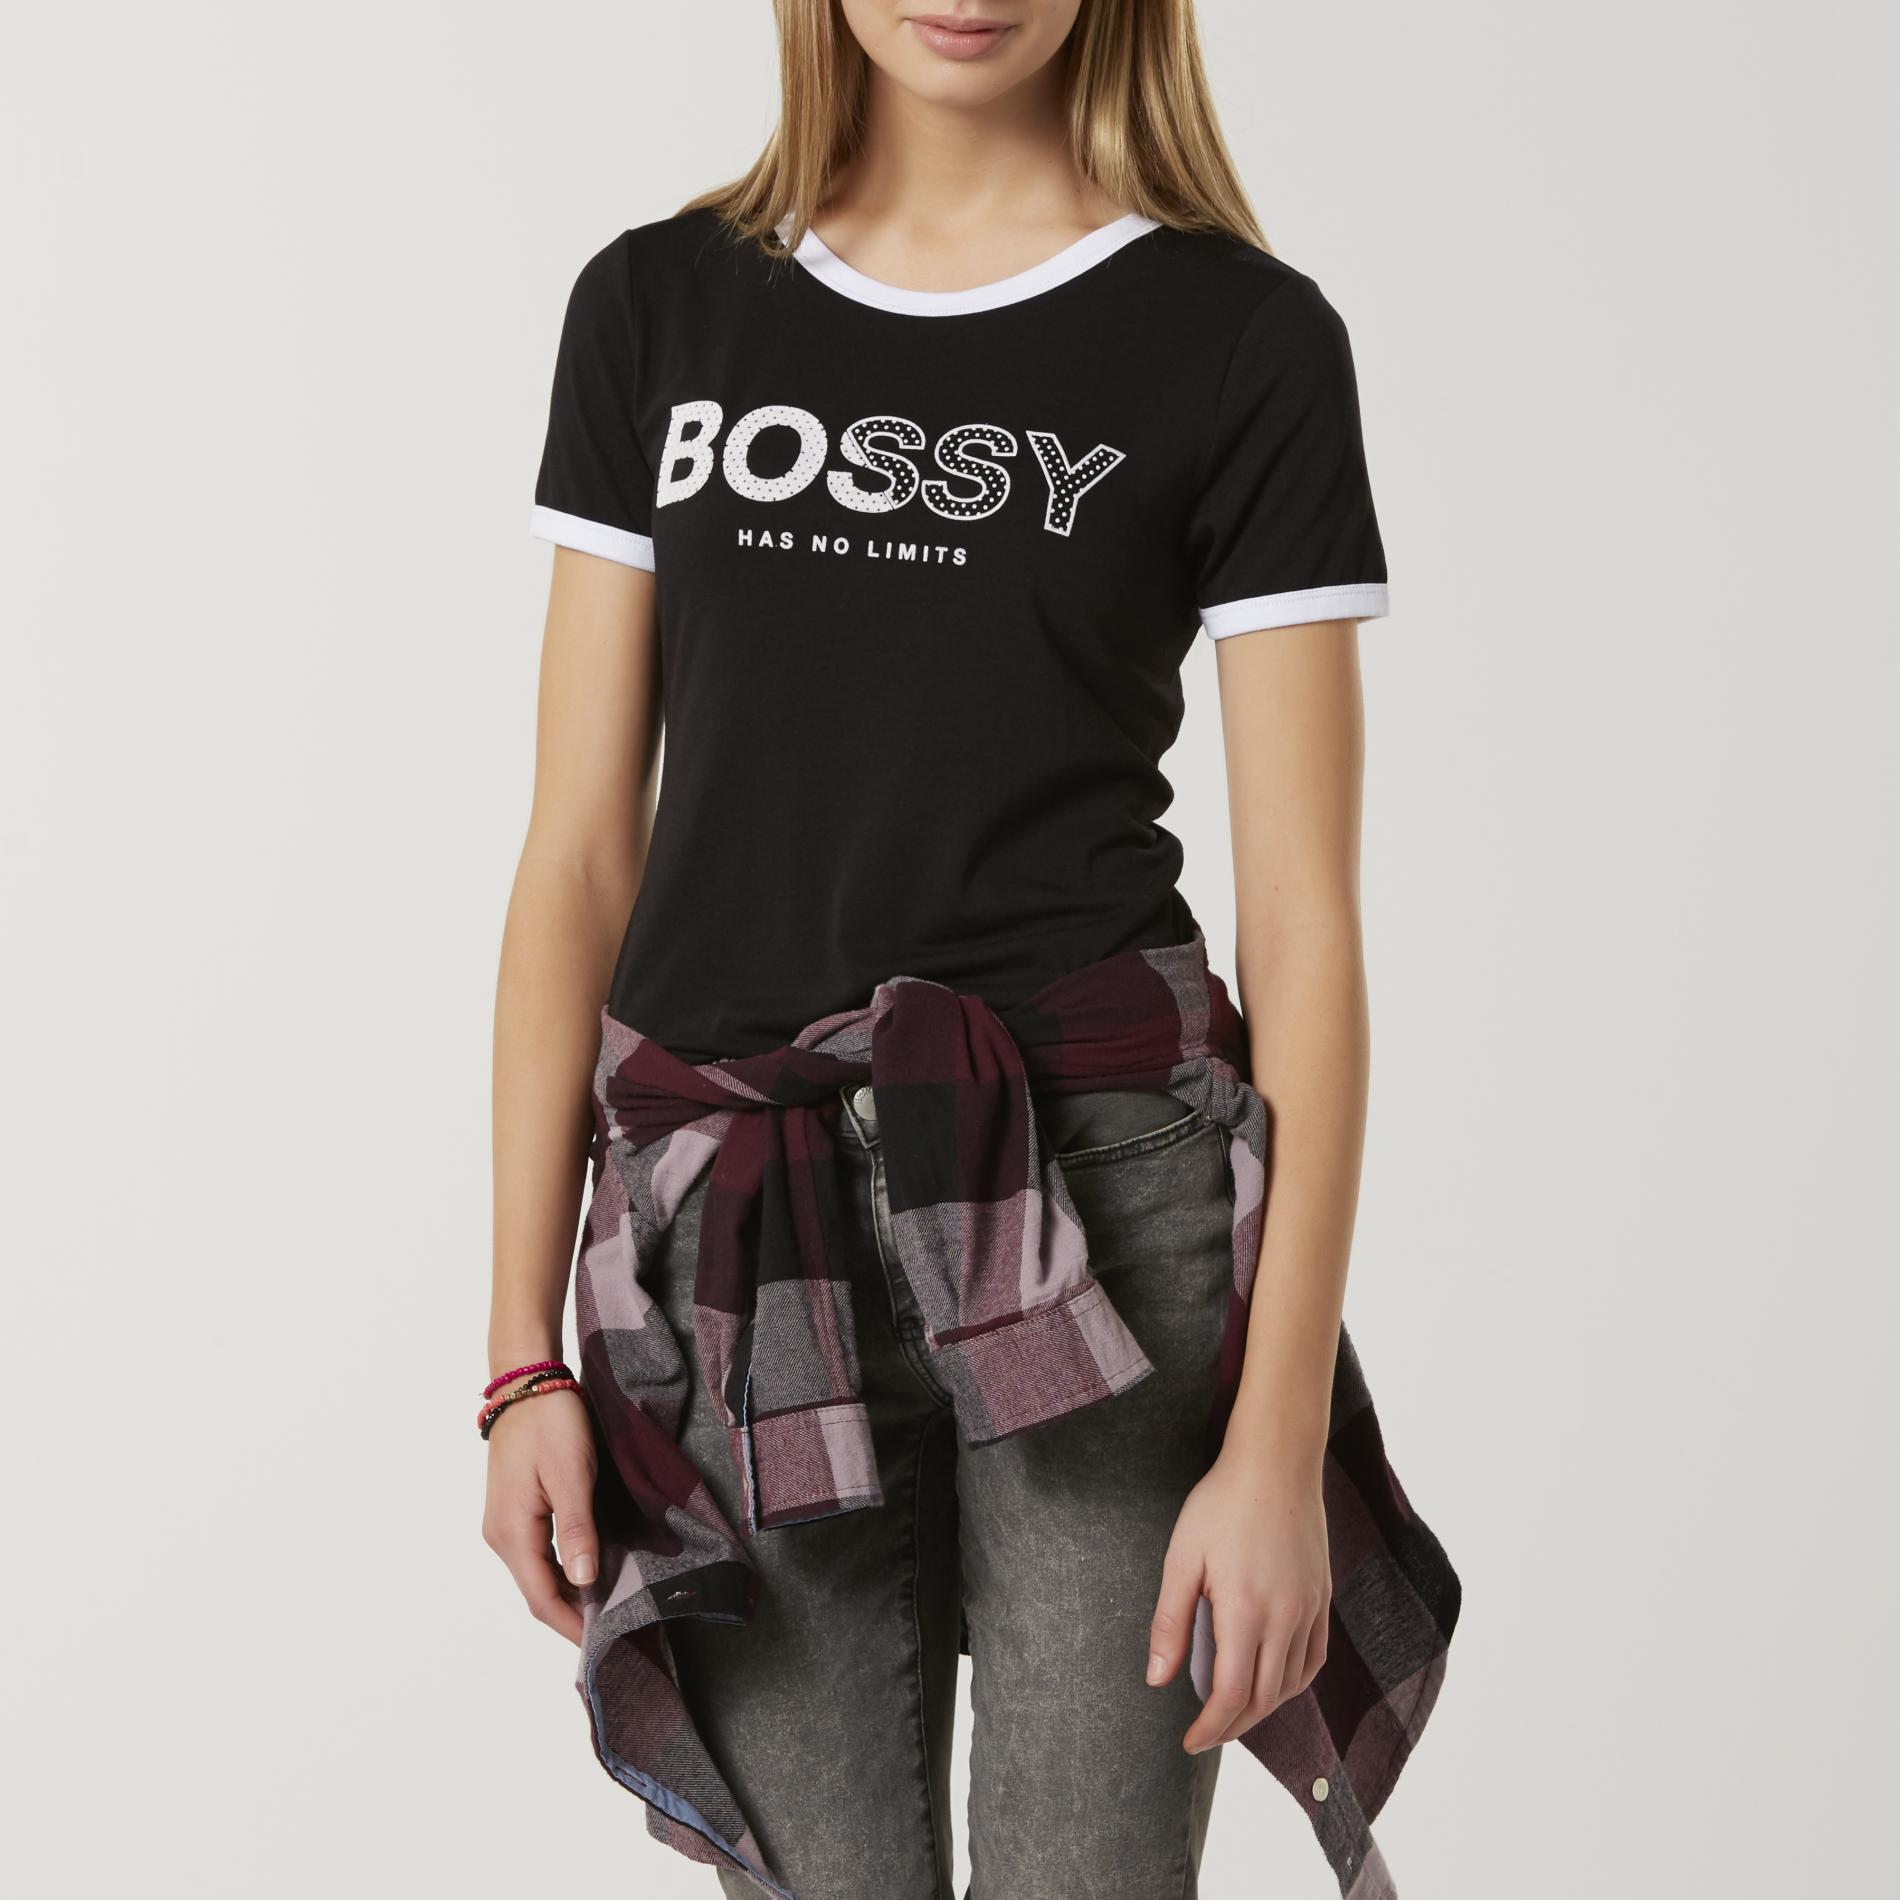 Joe Boxer Juniors' Ringer T-Shirt - Bossy Has No Limits